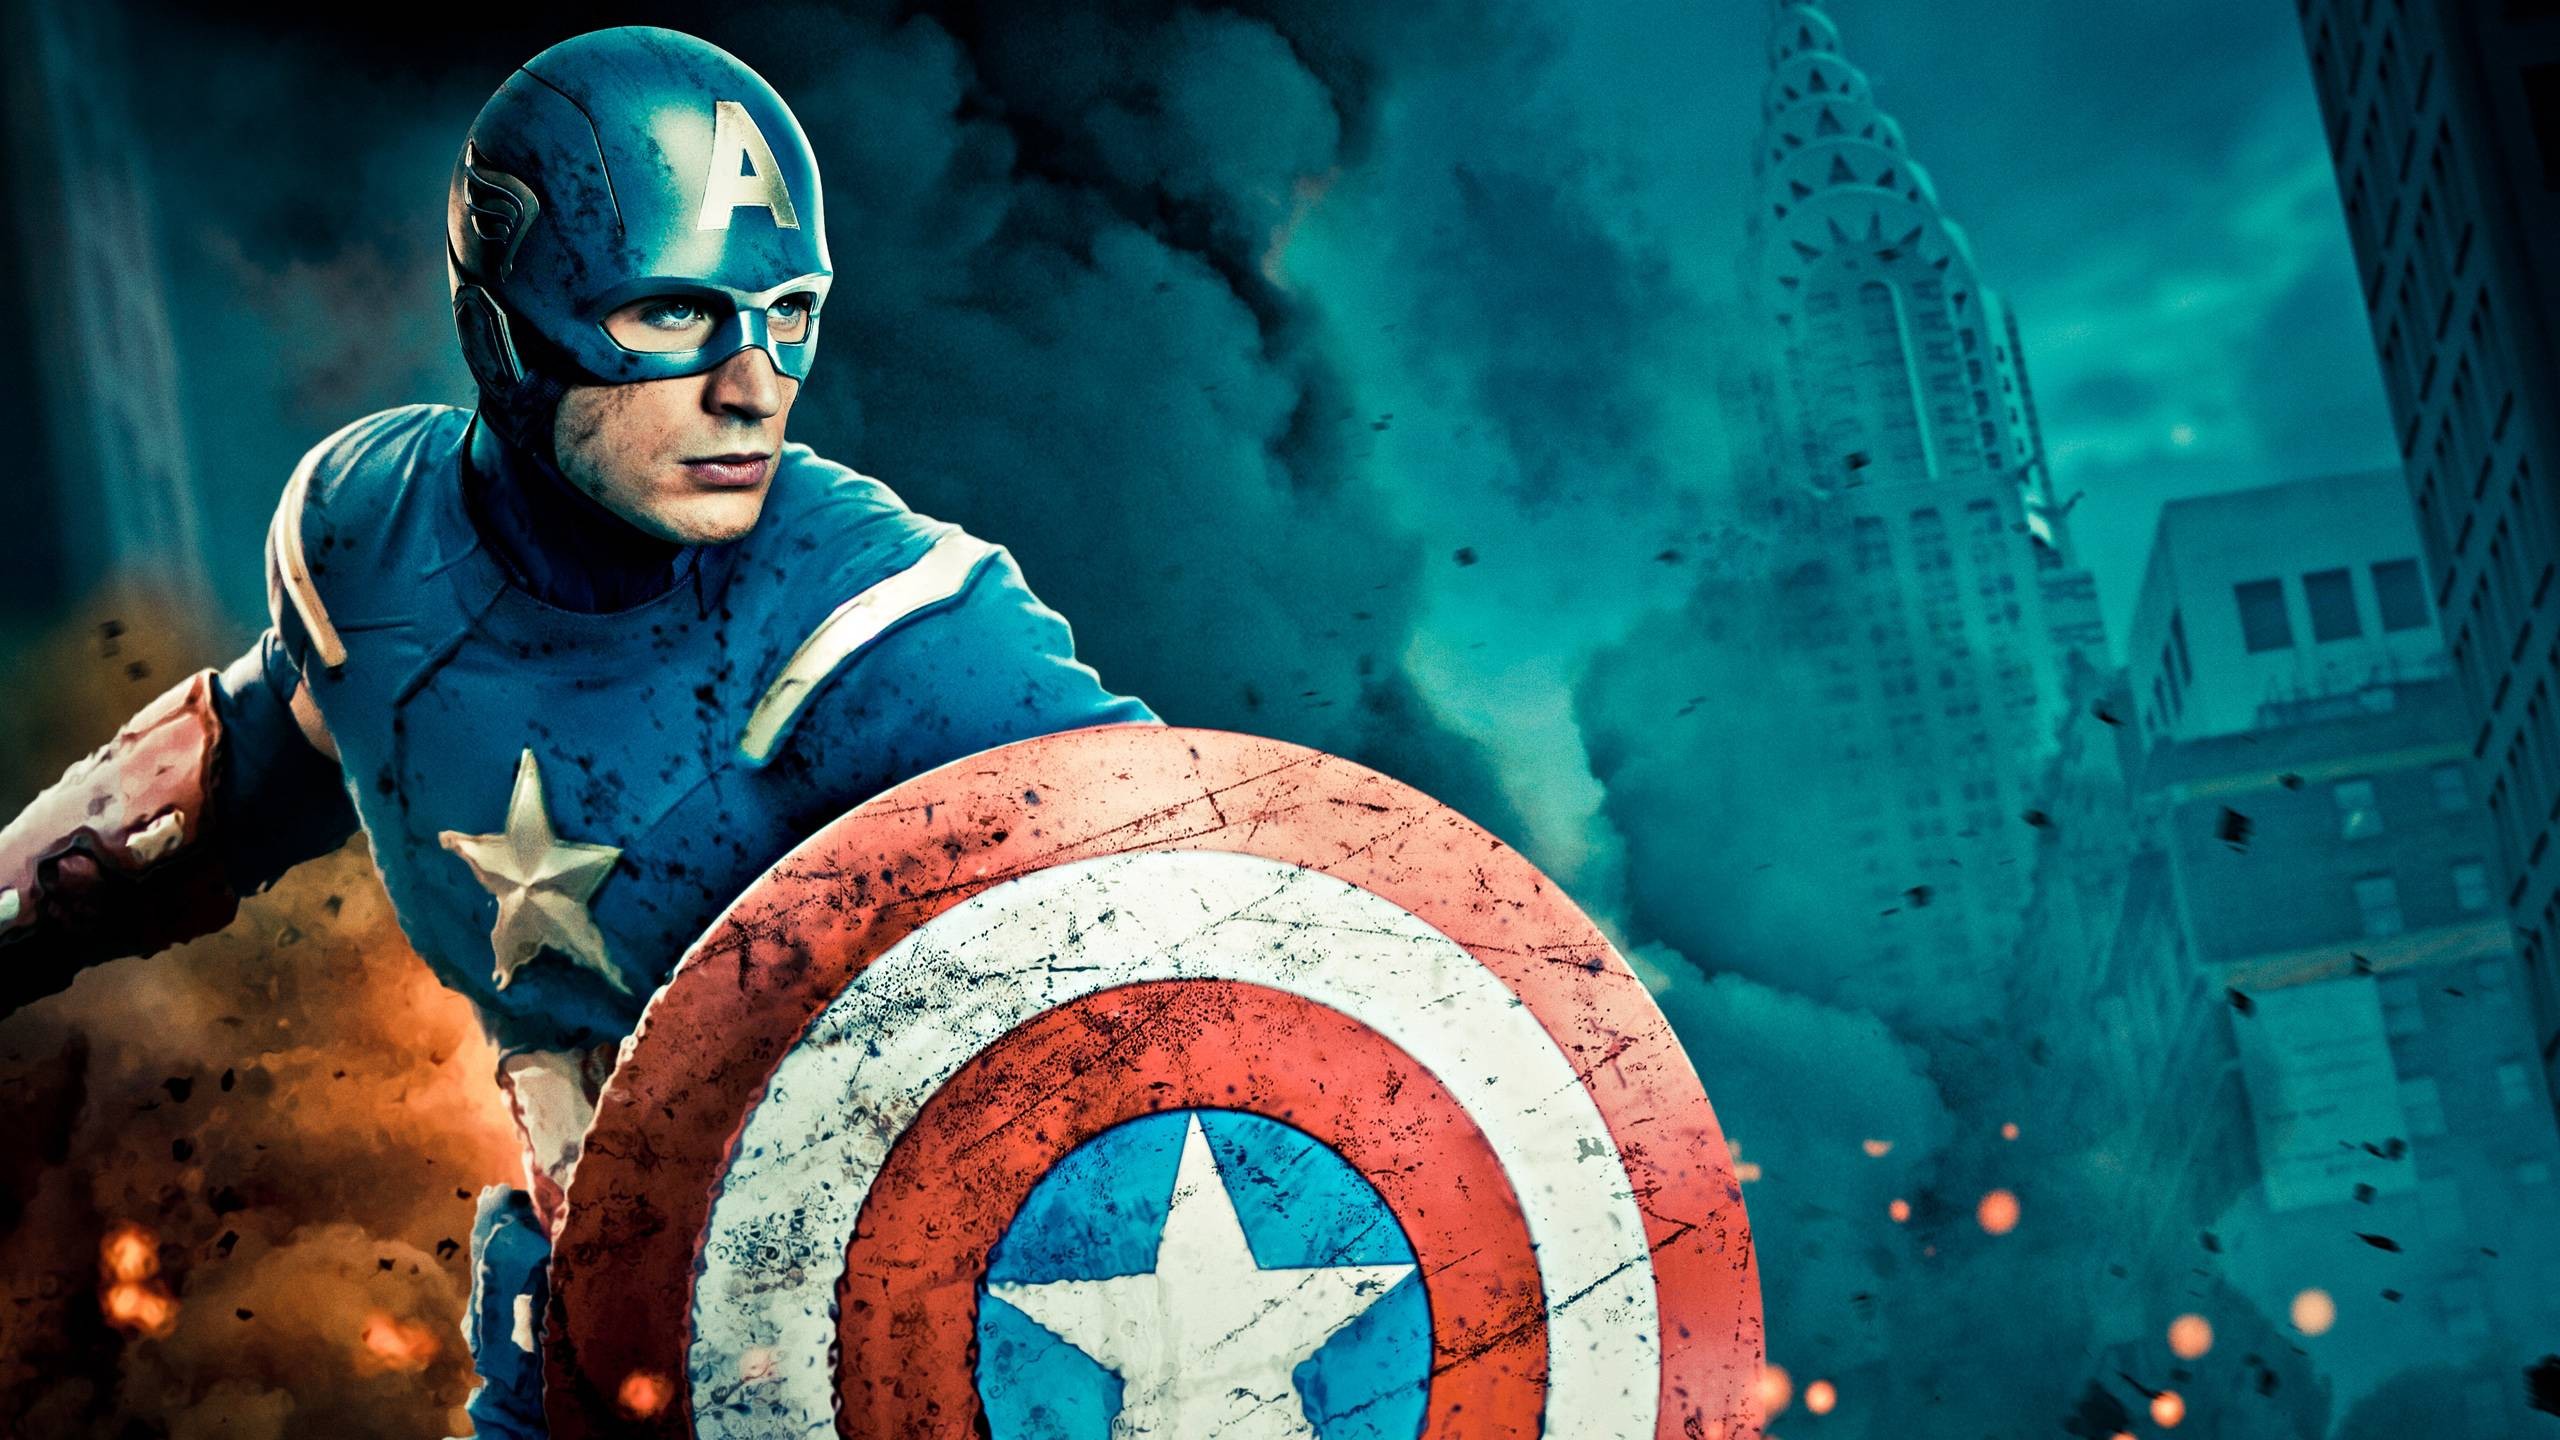 General 2560x1440 The Avengers Captain America Chris Evans Marvel Cinematic Universe